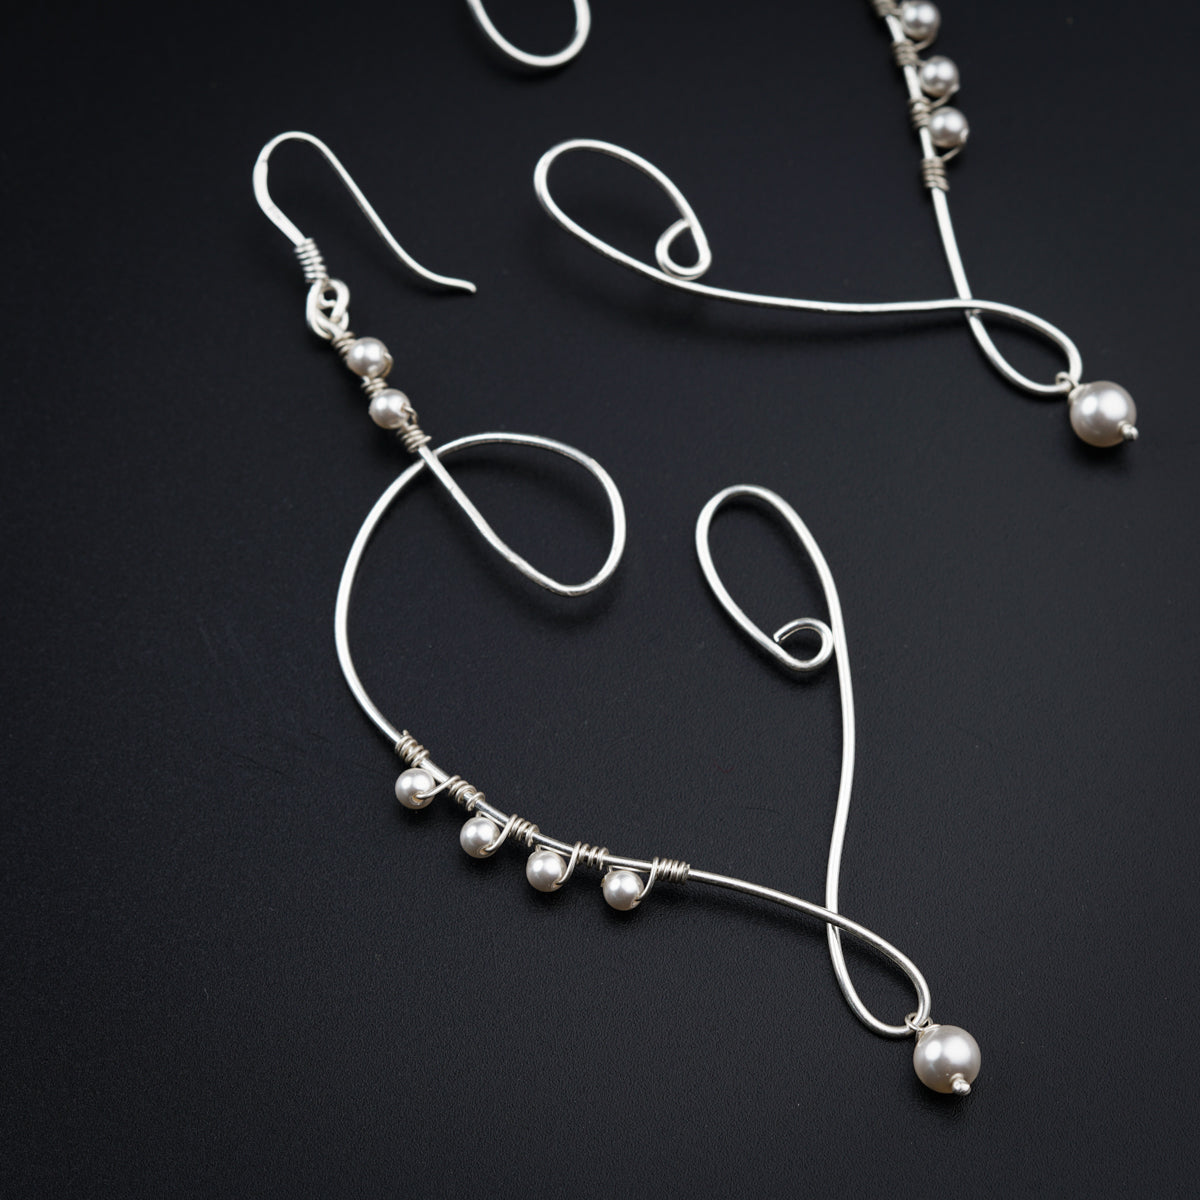 Abstract silver handmade earrings